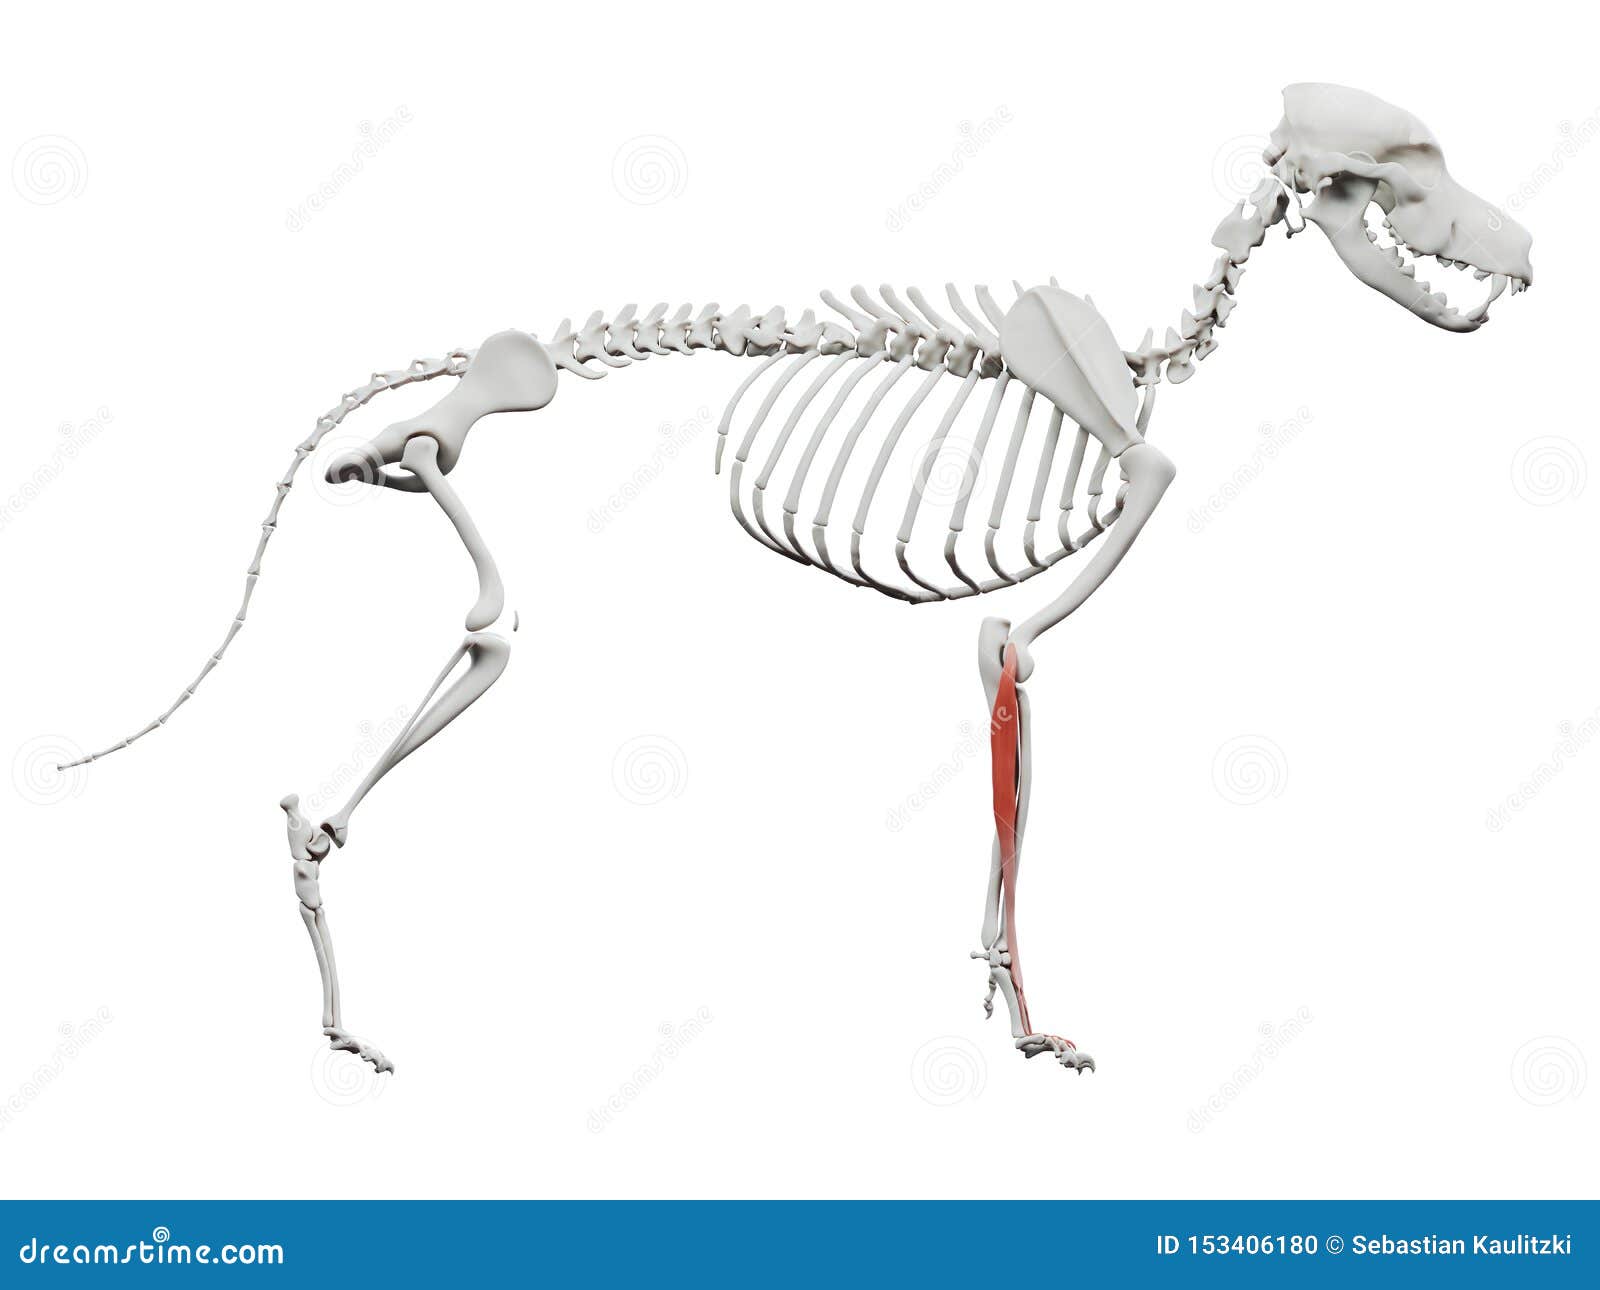 the dog muscle anatomy - extensor digitorum lateralis